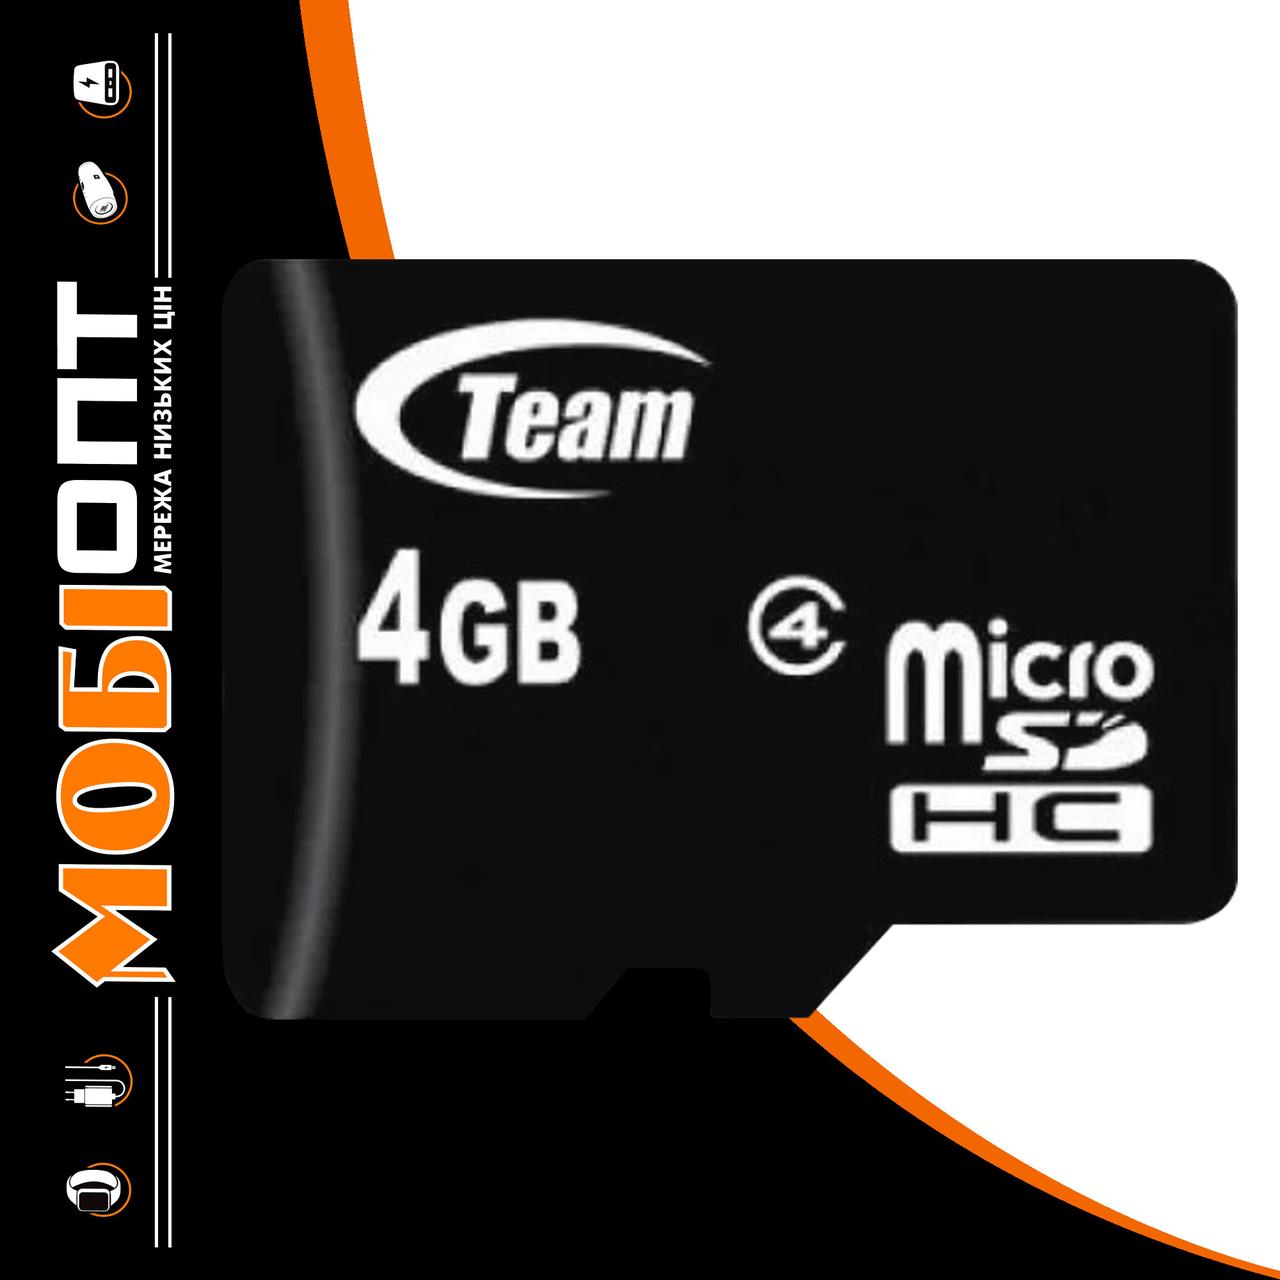 Micro SD 4GB/4 class Team